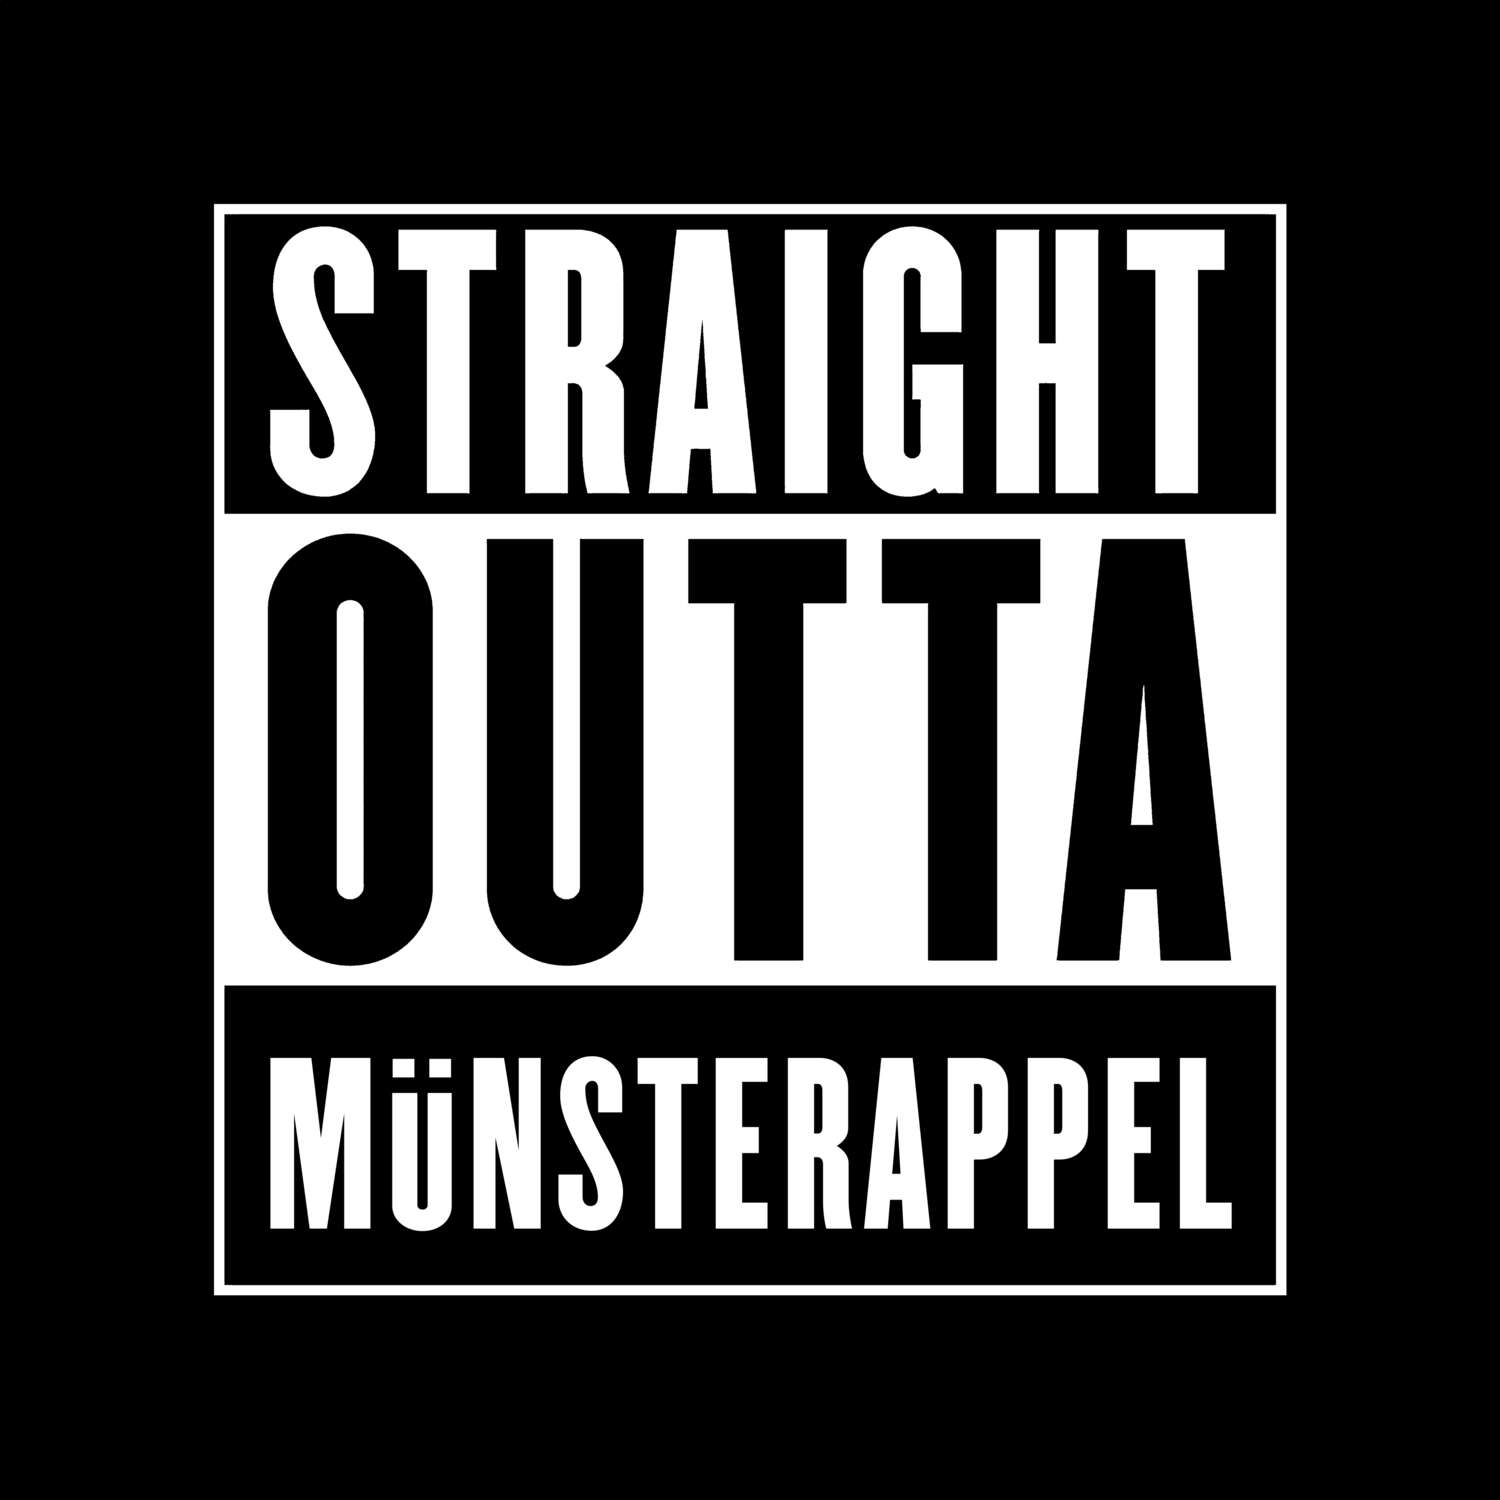 Münsterappel T-Shirt »Straight Outta«